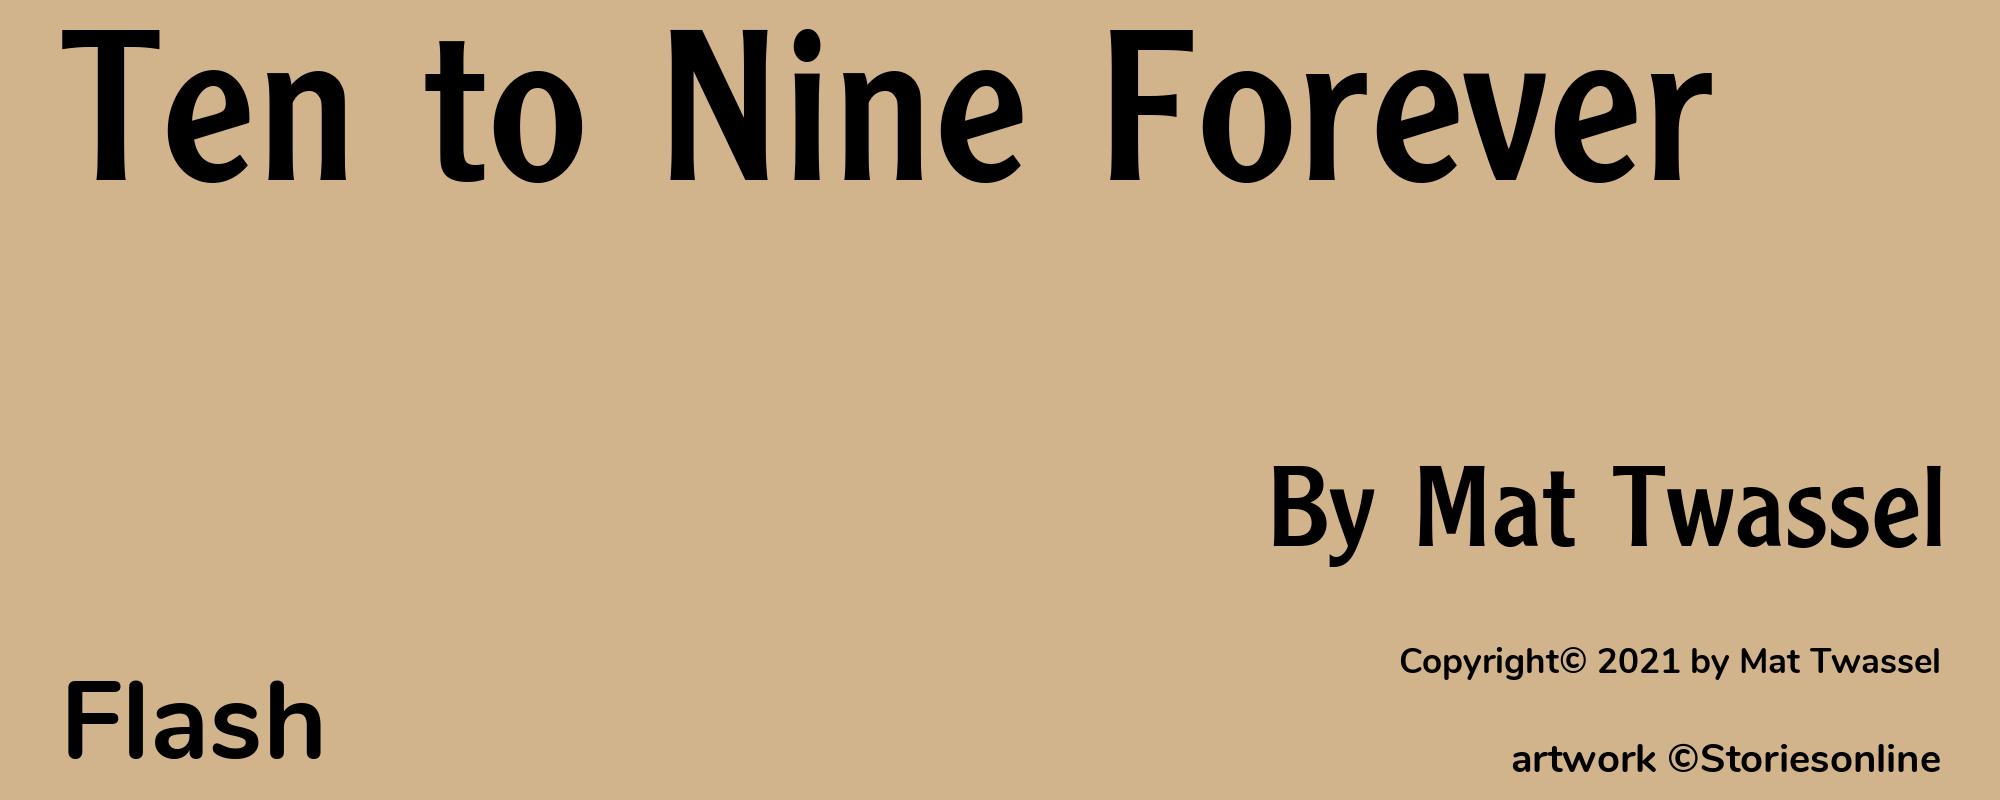 Ten to Nine Forever - Cover